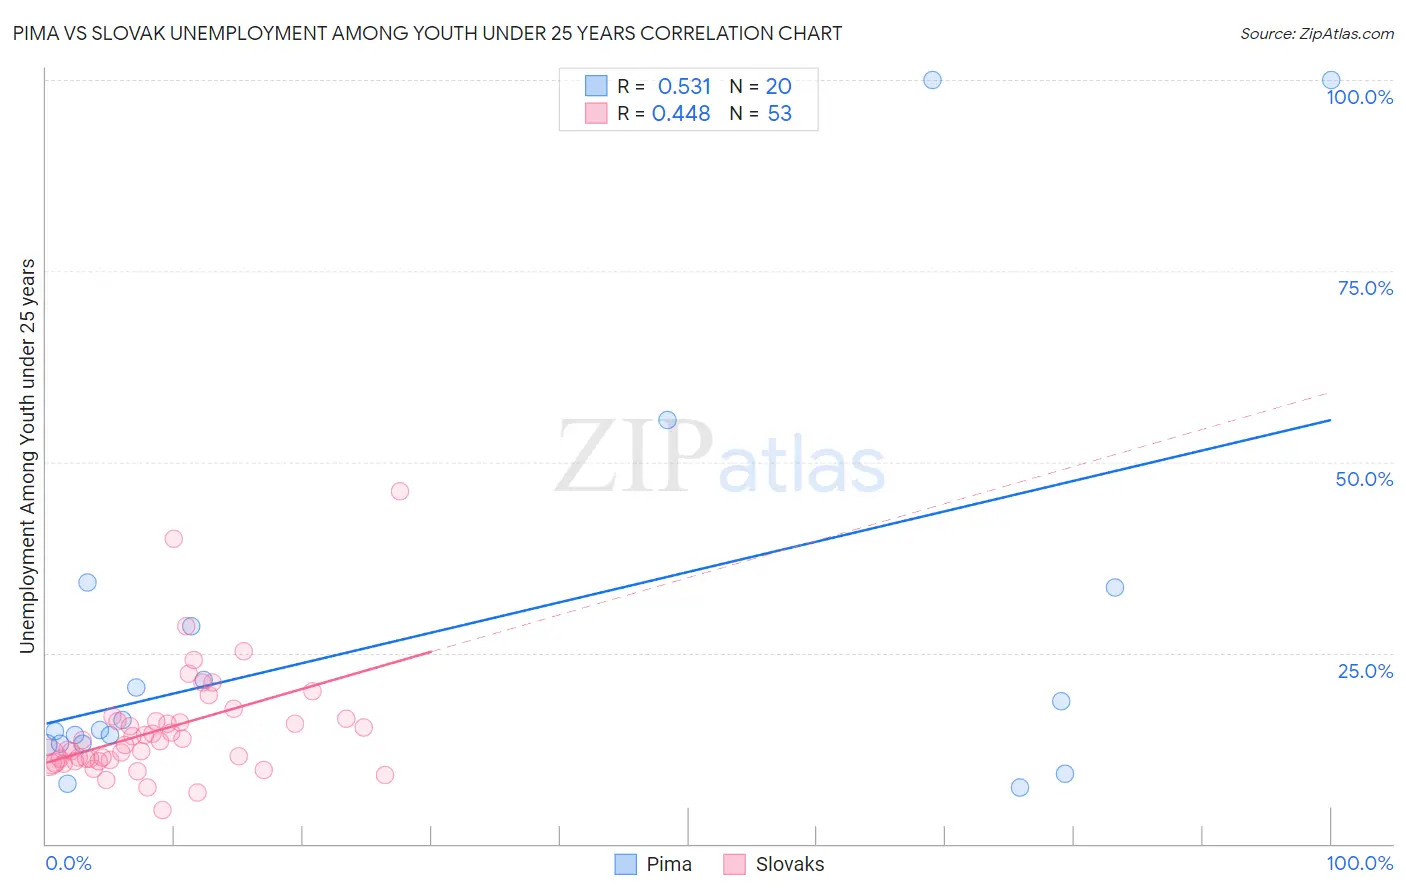 Pima vs Slovak Unemployment Among Youth under 25 years